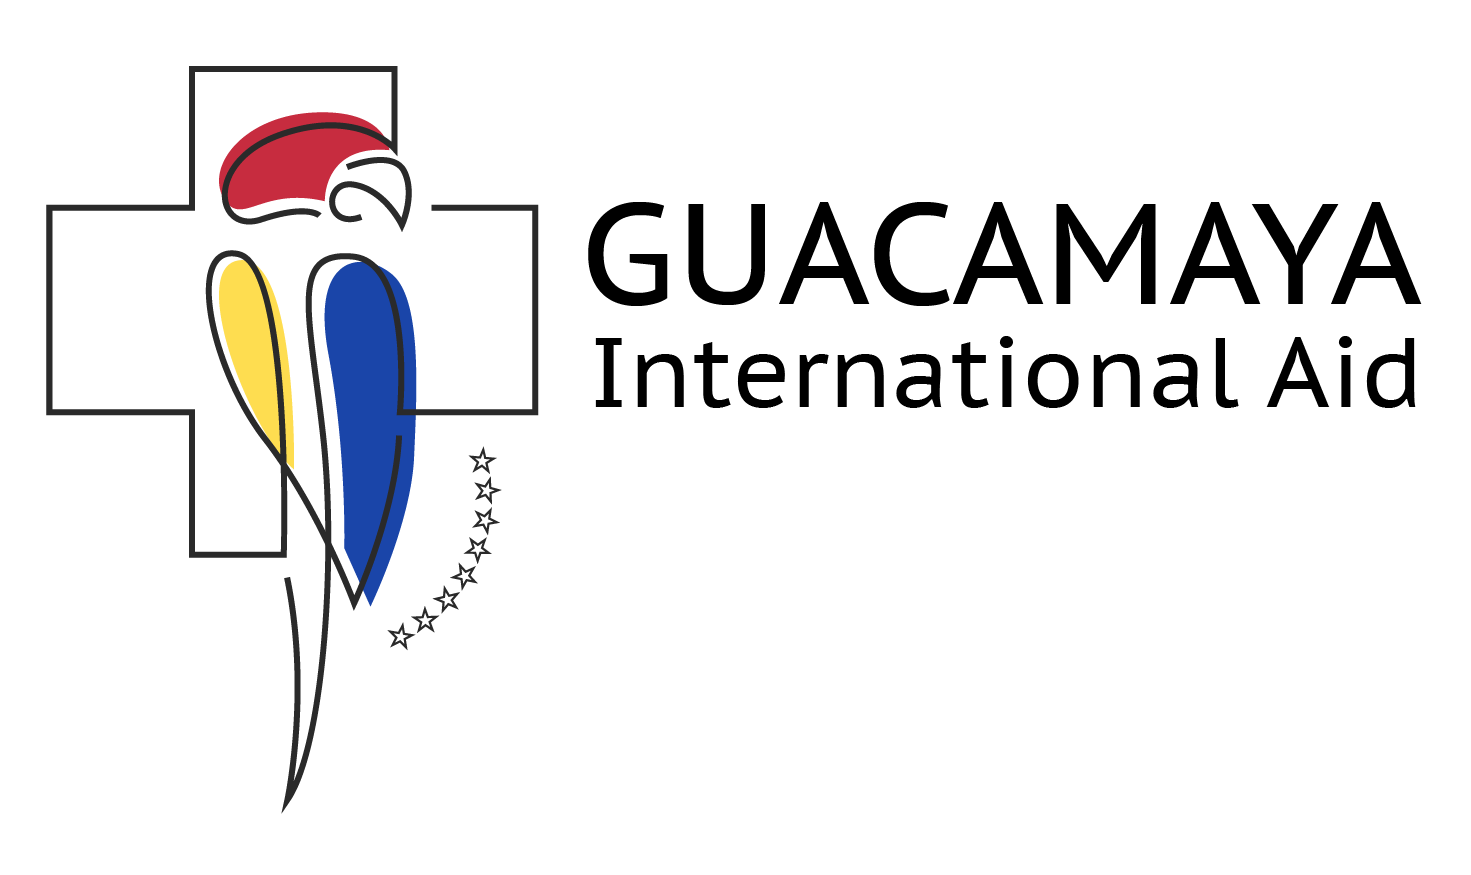 Guacamaya International Aid